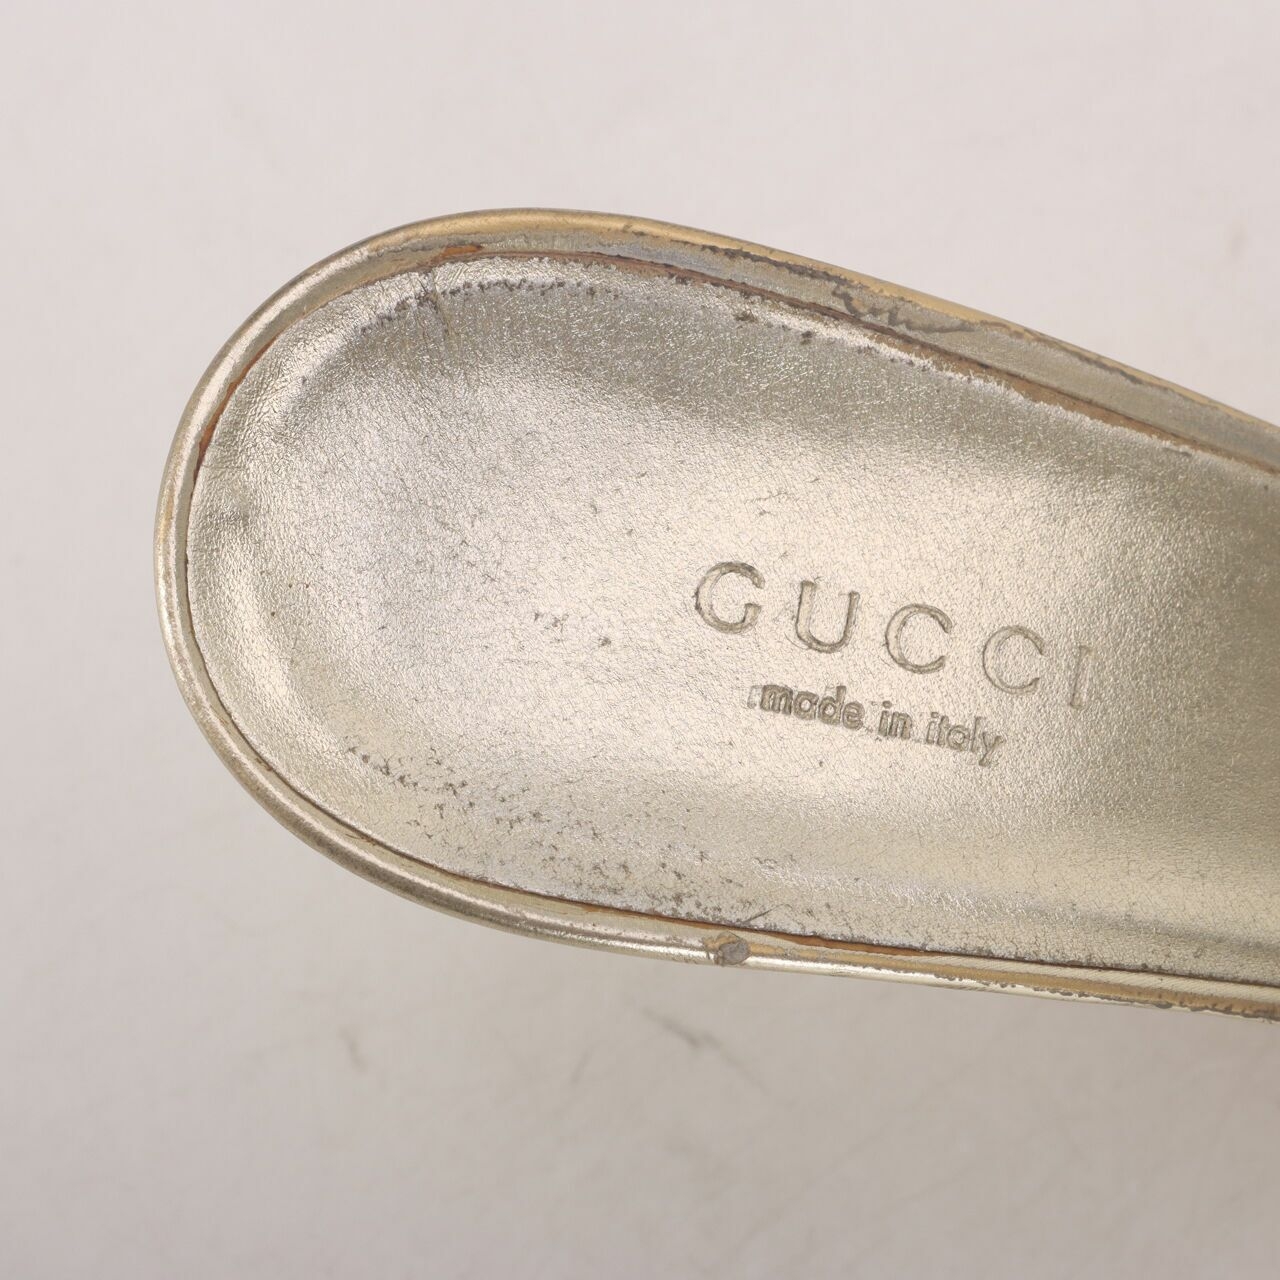 Gucci Rasteria Feminina Gold Heels